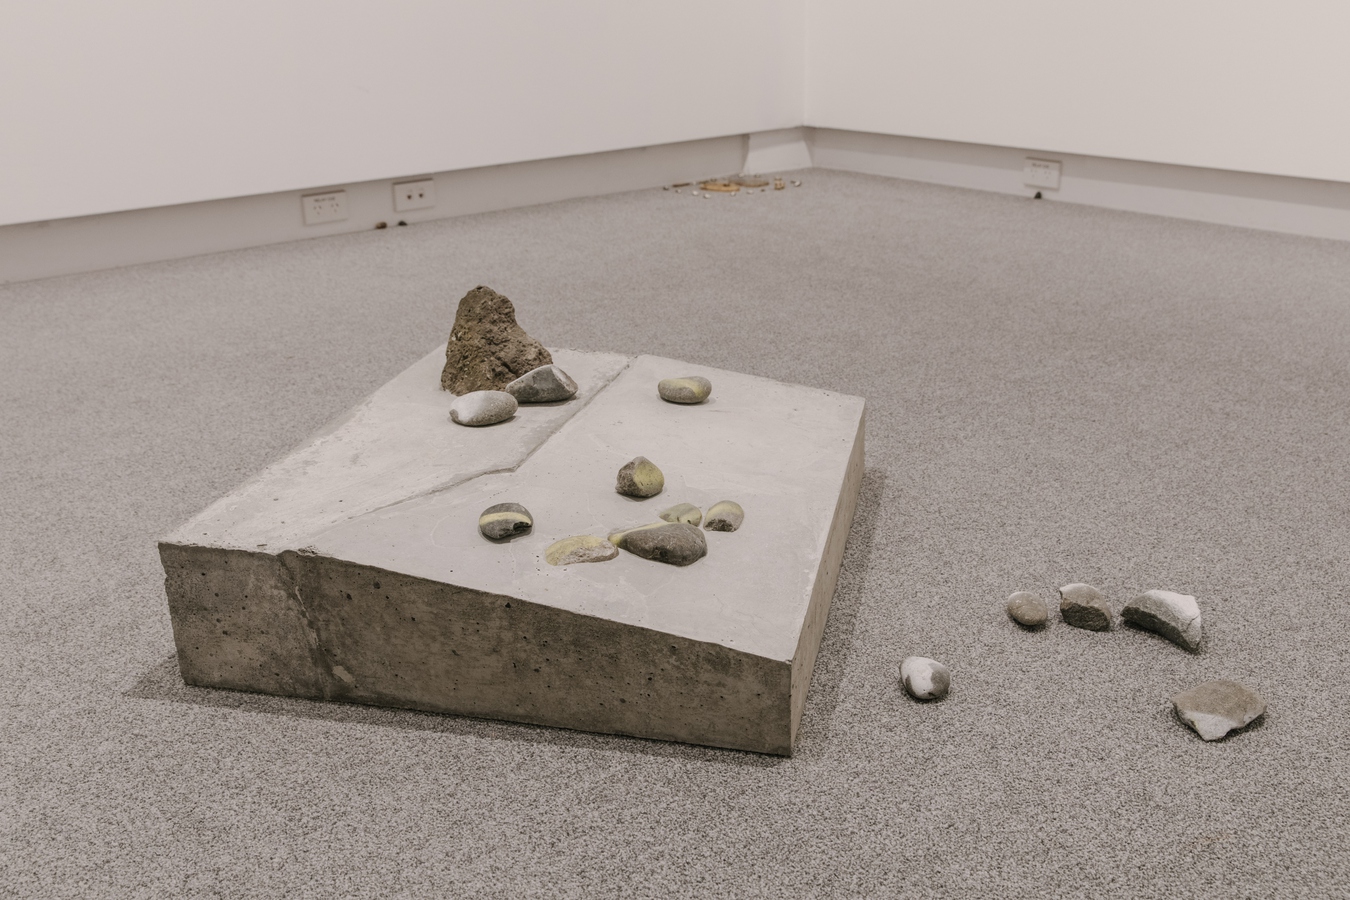 Image: Sam Towse, Speckled skin, loose stones (detail), 2022. Concrete, steel, polystyrene, rocks, bricks and concrete detritus. Photo by Nancy Zhou.